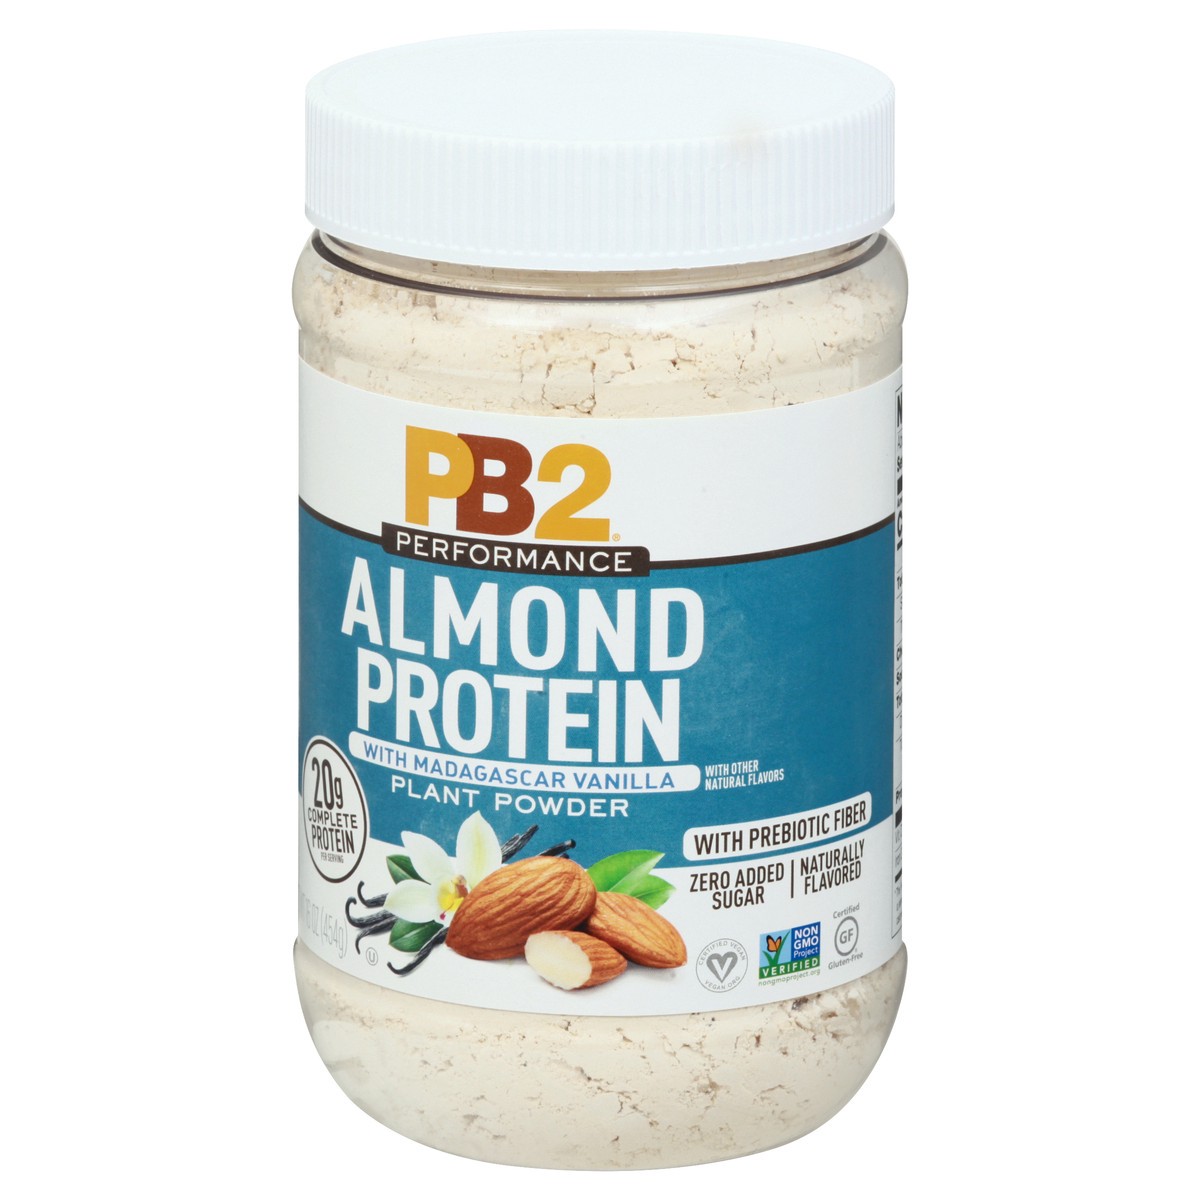 slide 2 of 13, PB2 Almond Protein With Madagascar Vanilla Plant Powder, 16 oz